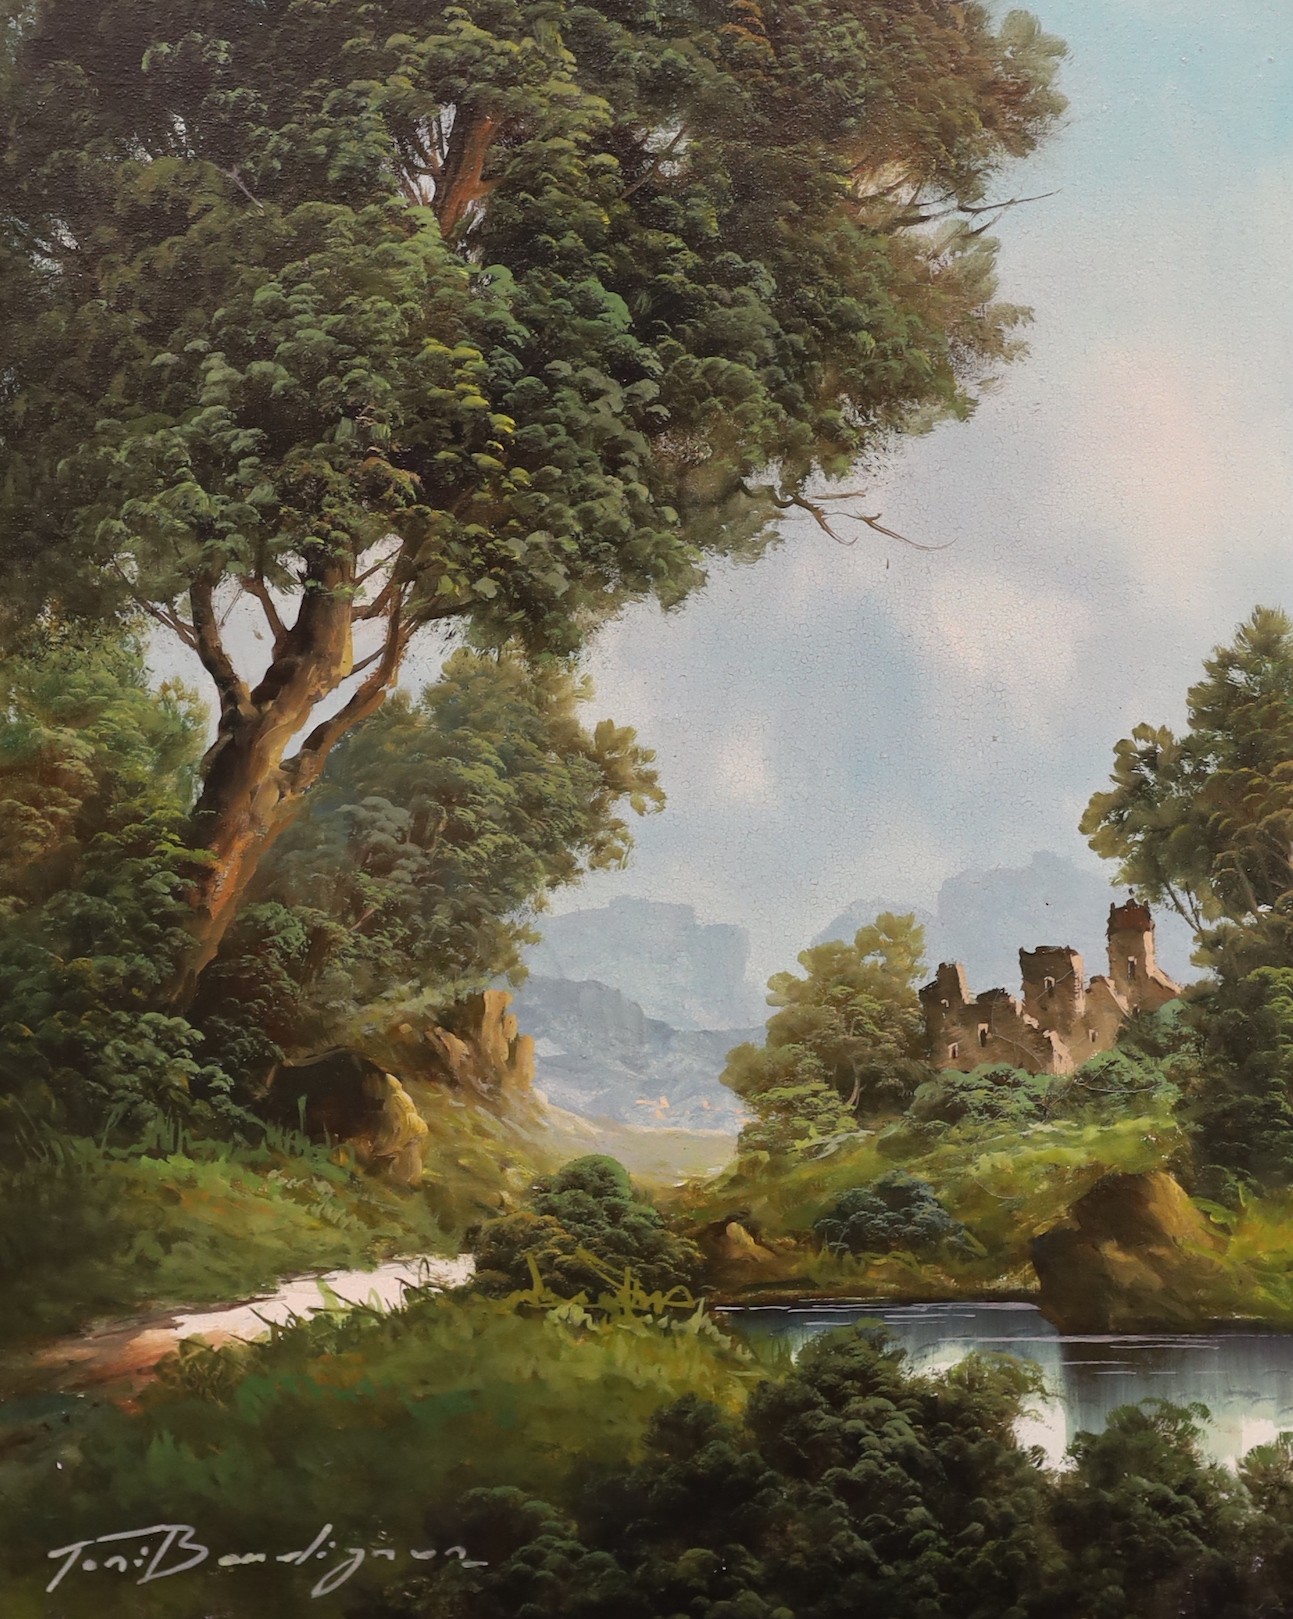 Toni Bordignon (1921-), oil on canvas, Ruins in a wooded landscape, signed, 50 x 40cm